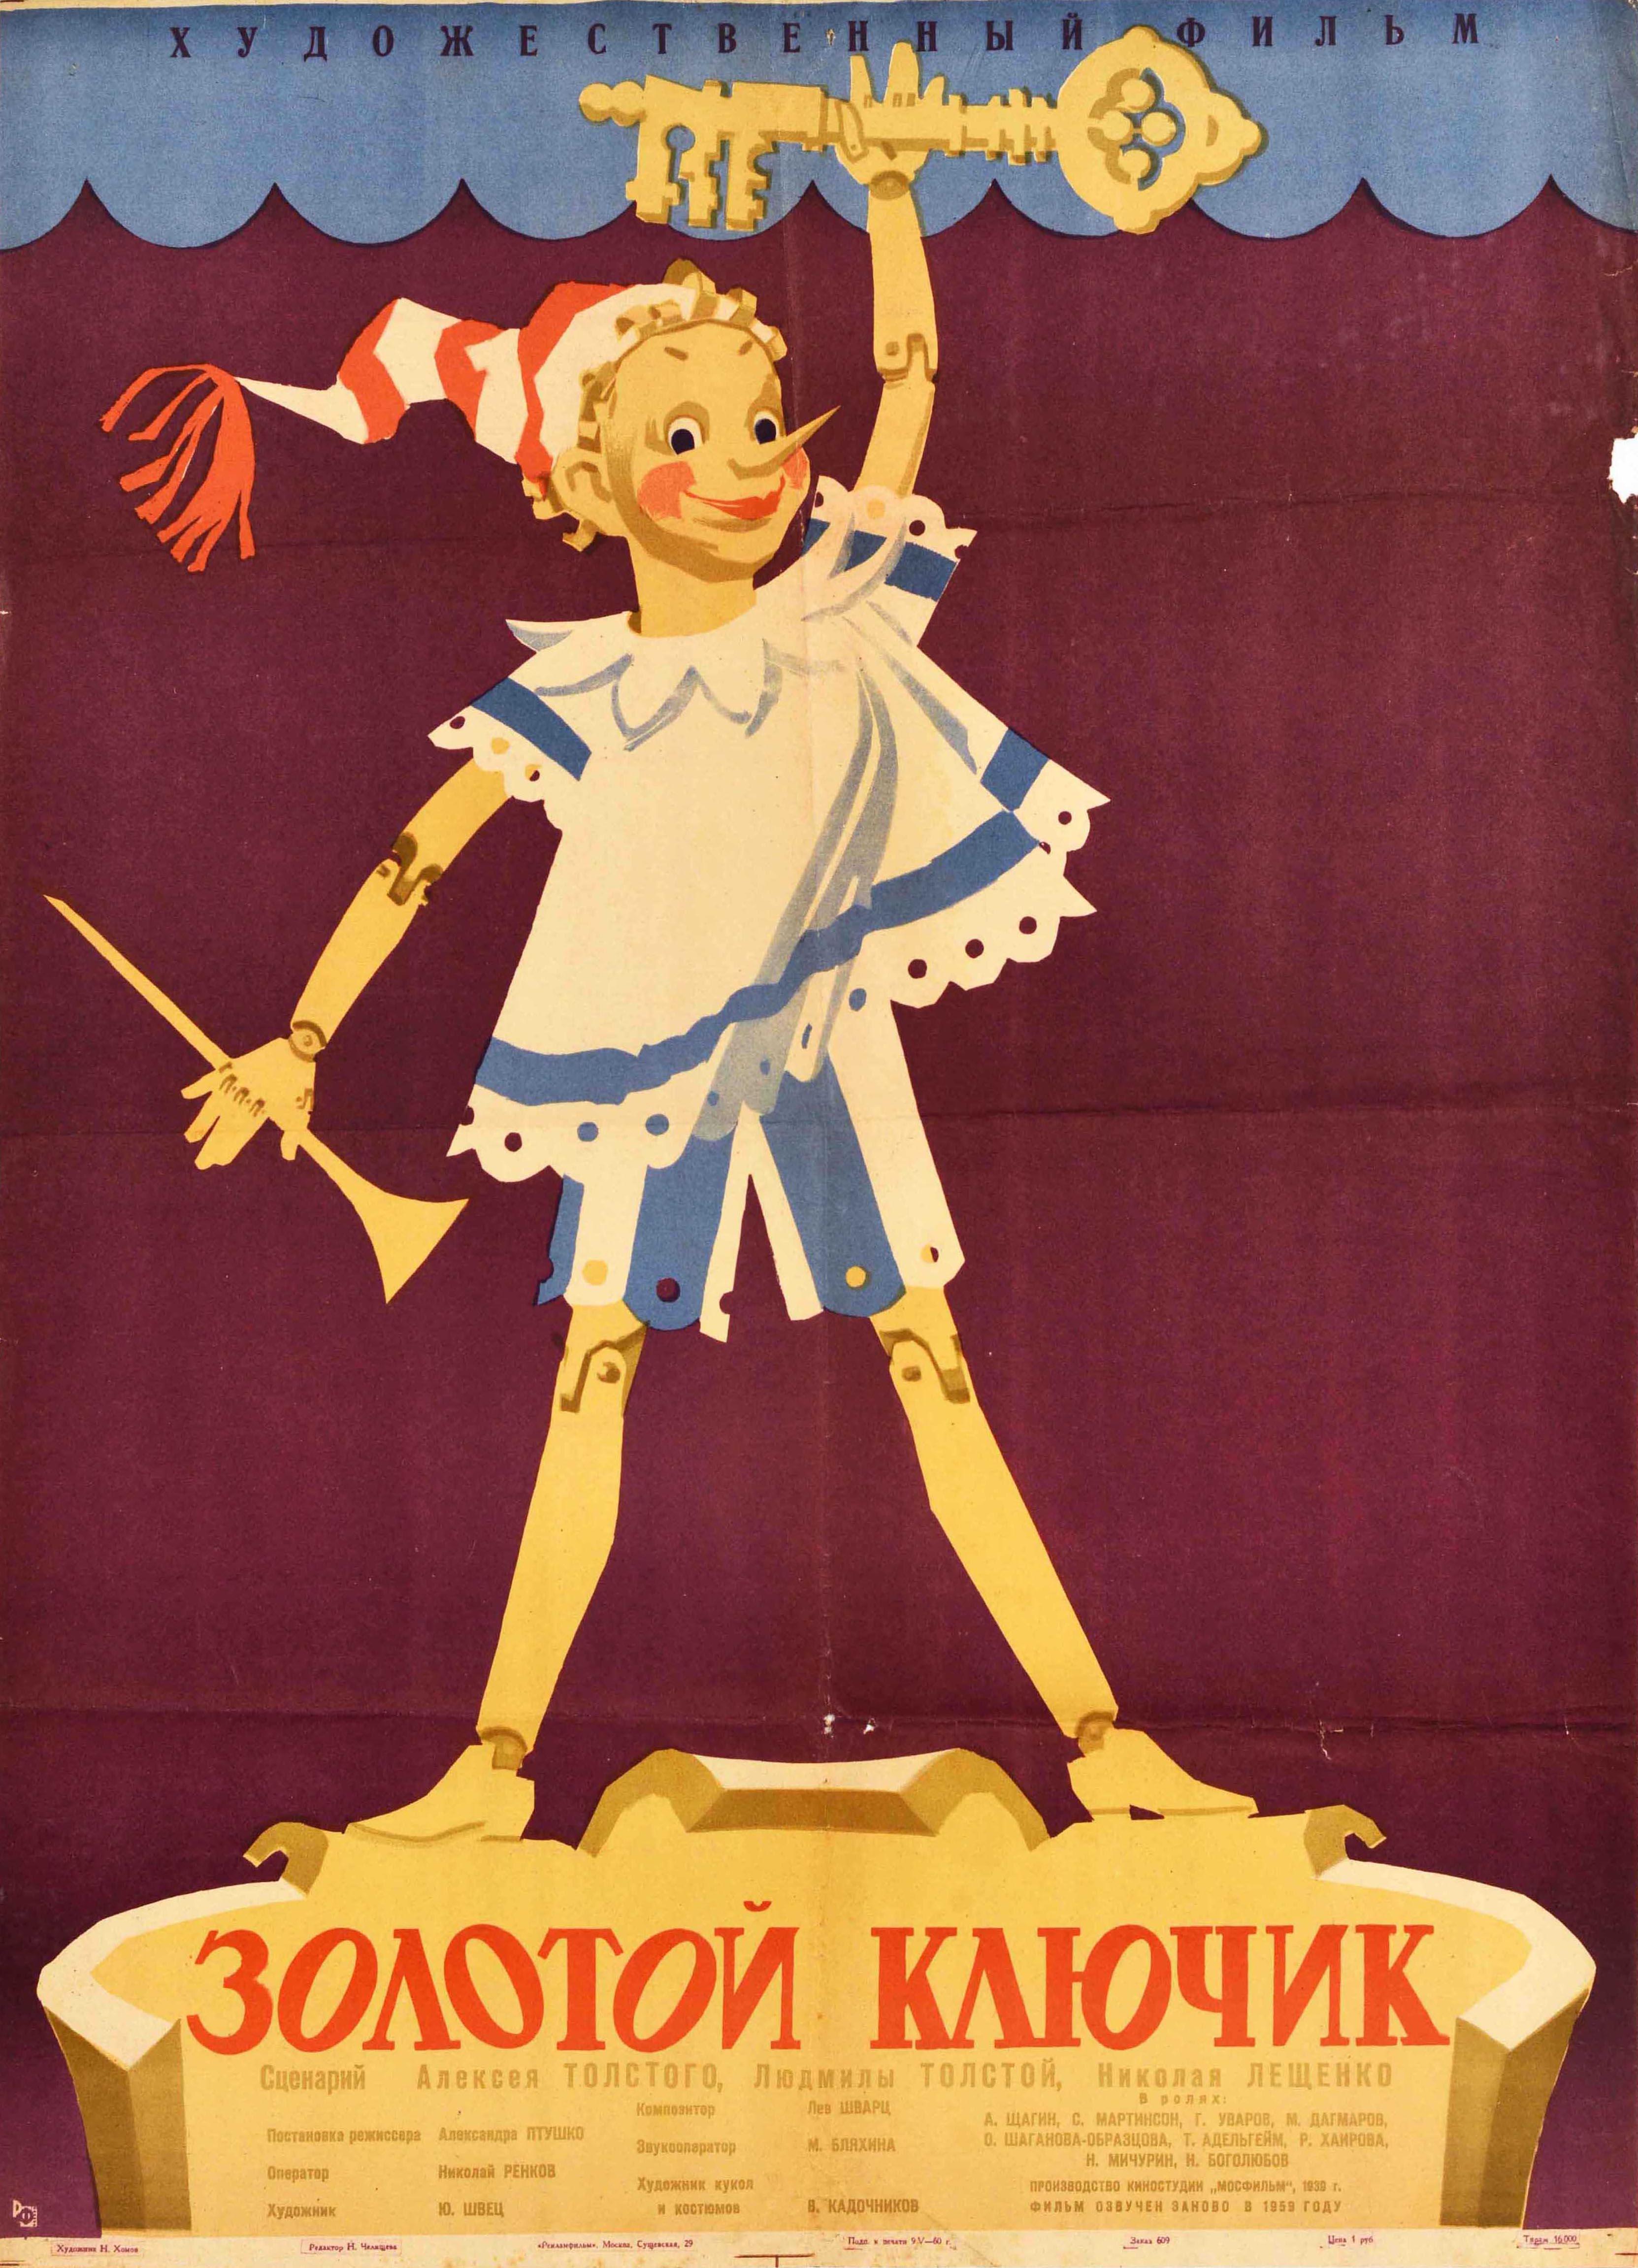 Khomov Print - Original Vintage Film Poster The Golden Key Adventures Of Pinocchio Buratino Art